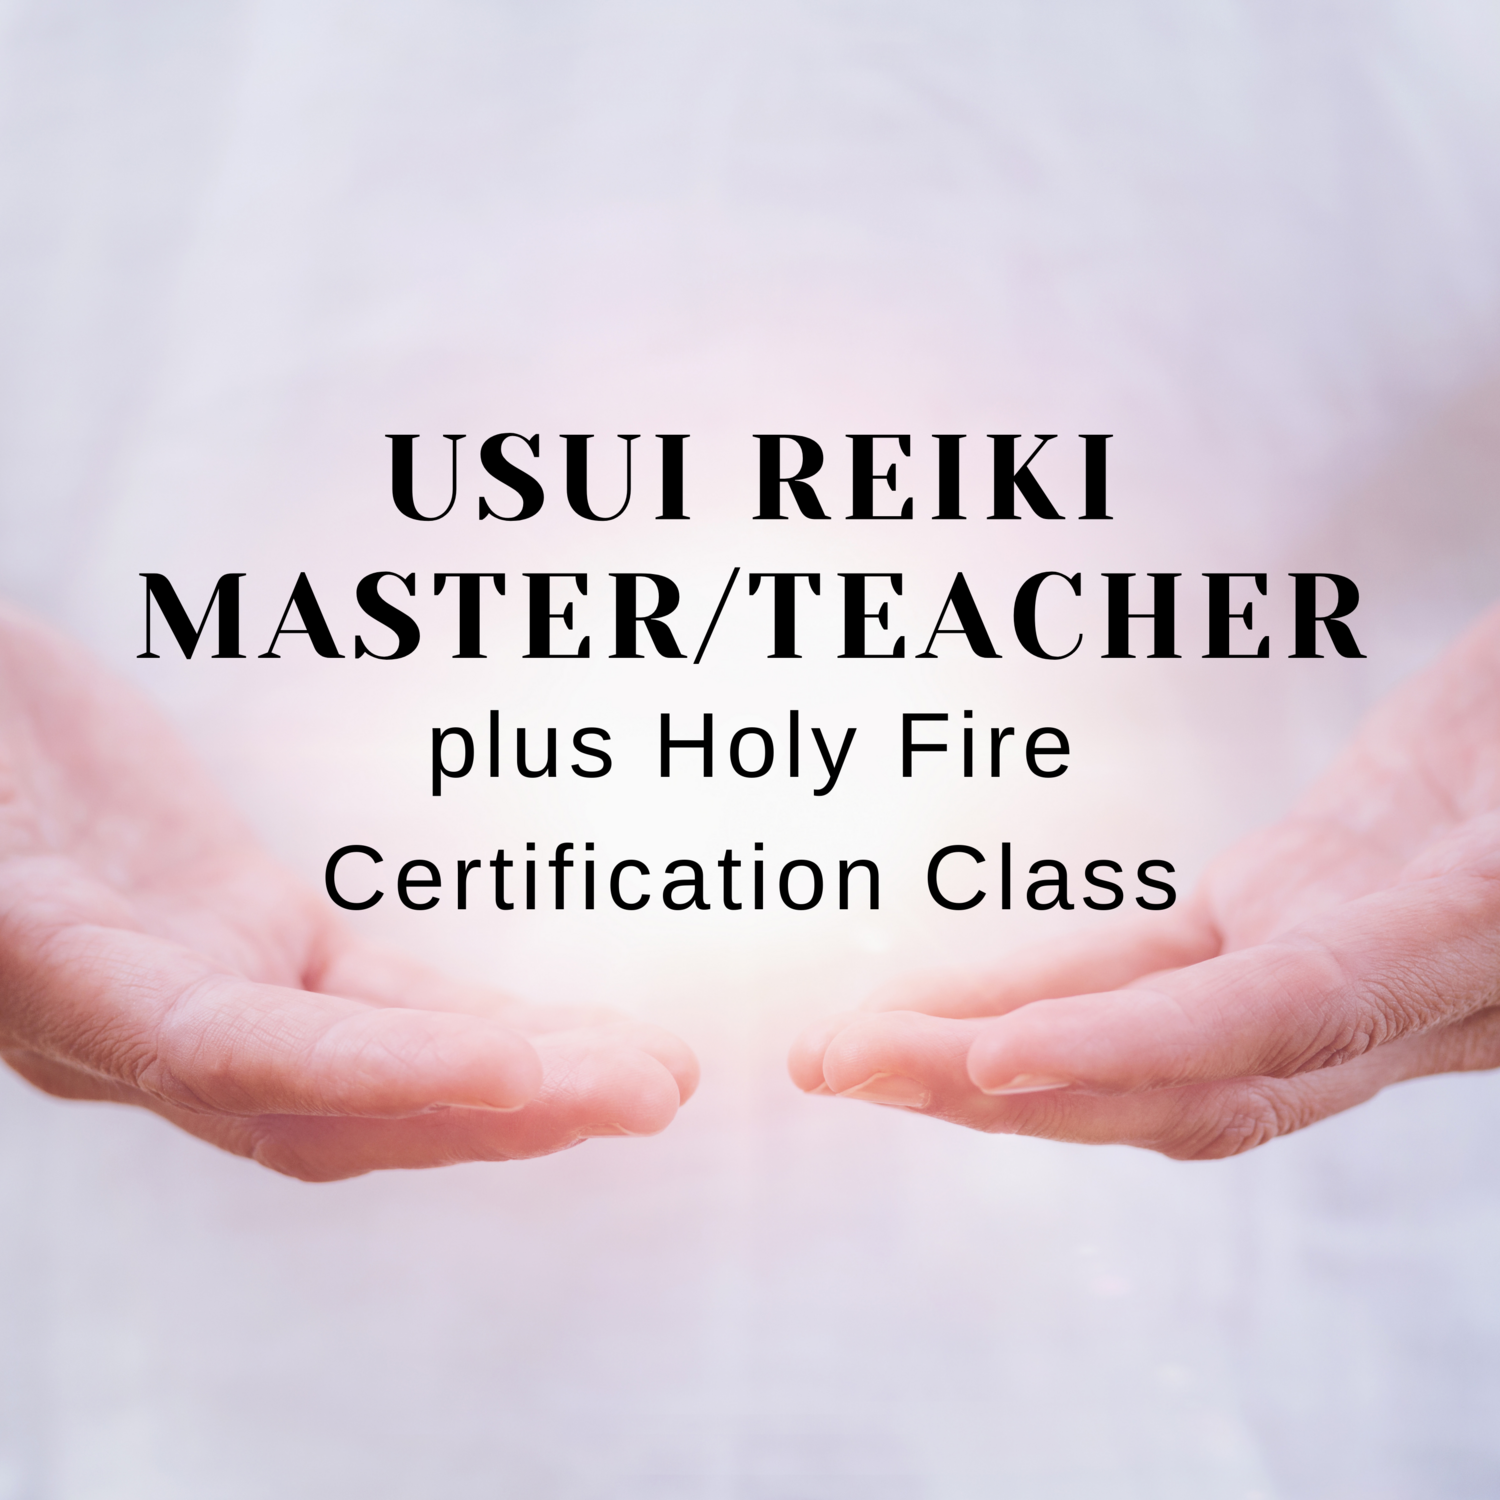 Usui Reiki Master Teacher plus Holy Fire Certification Class